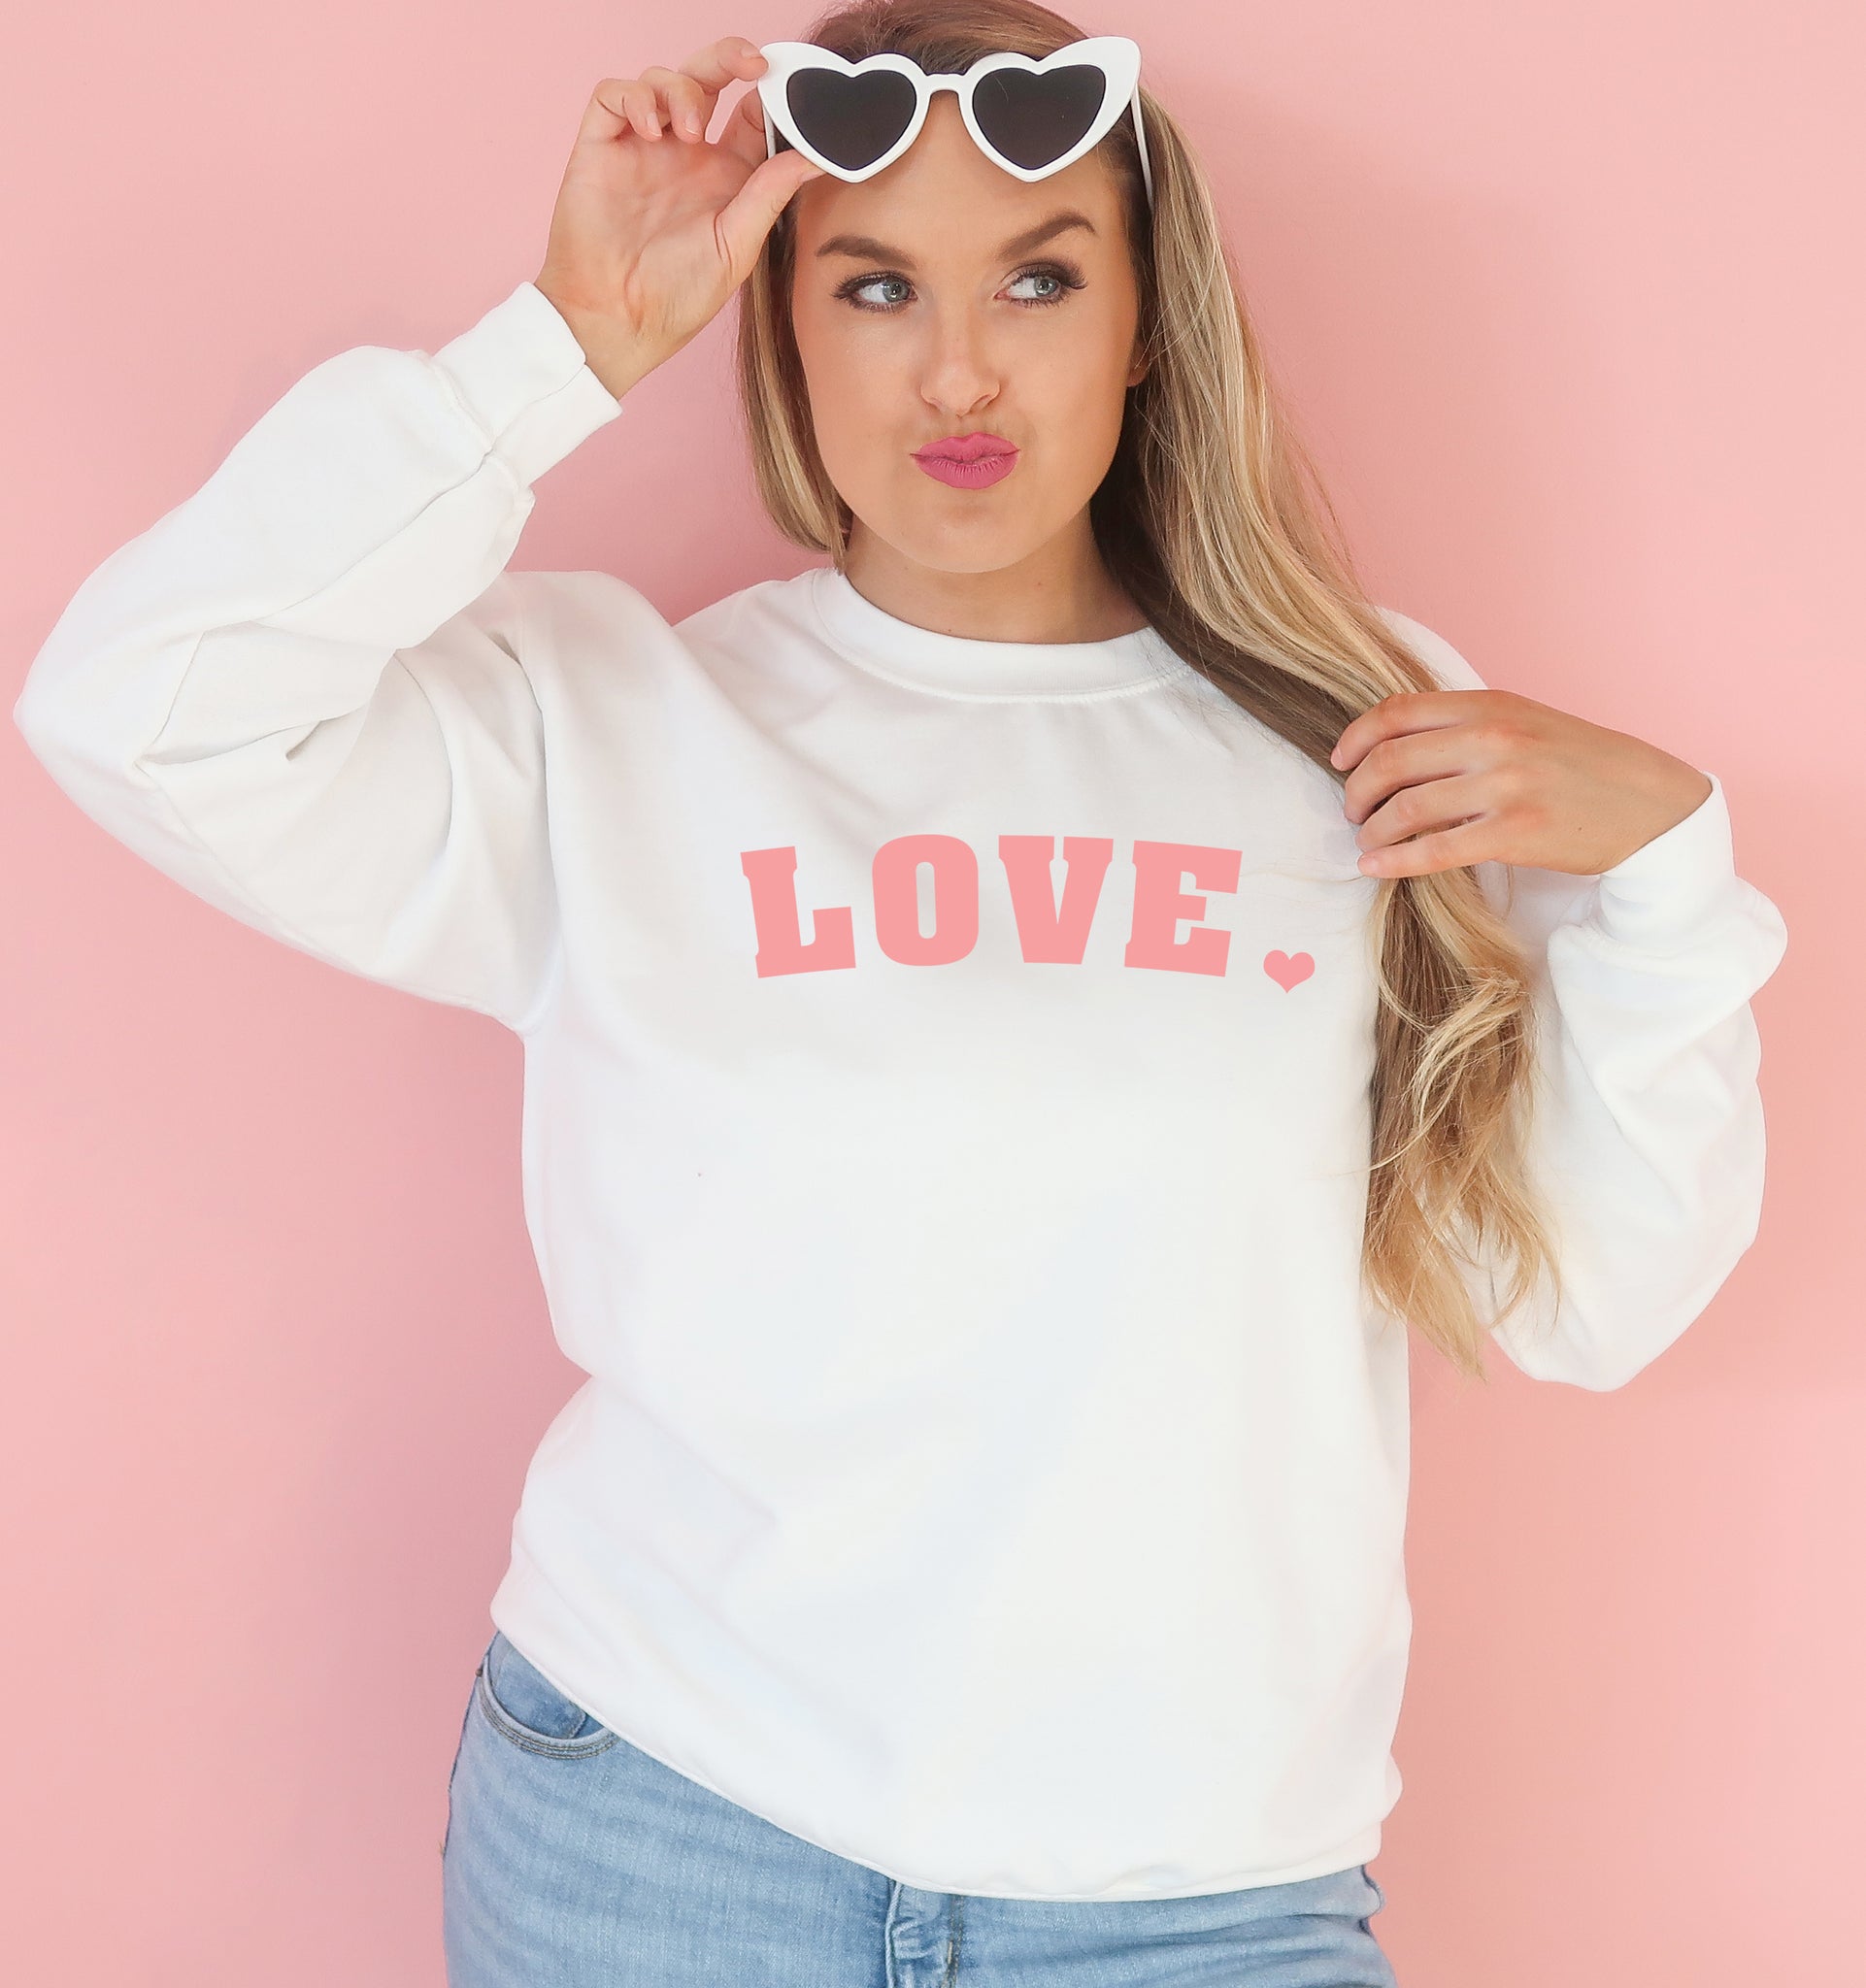 The "Blushing Love" Crewneck Sweater